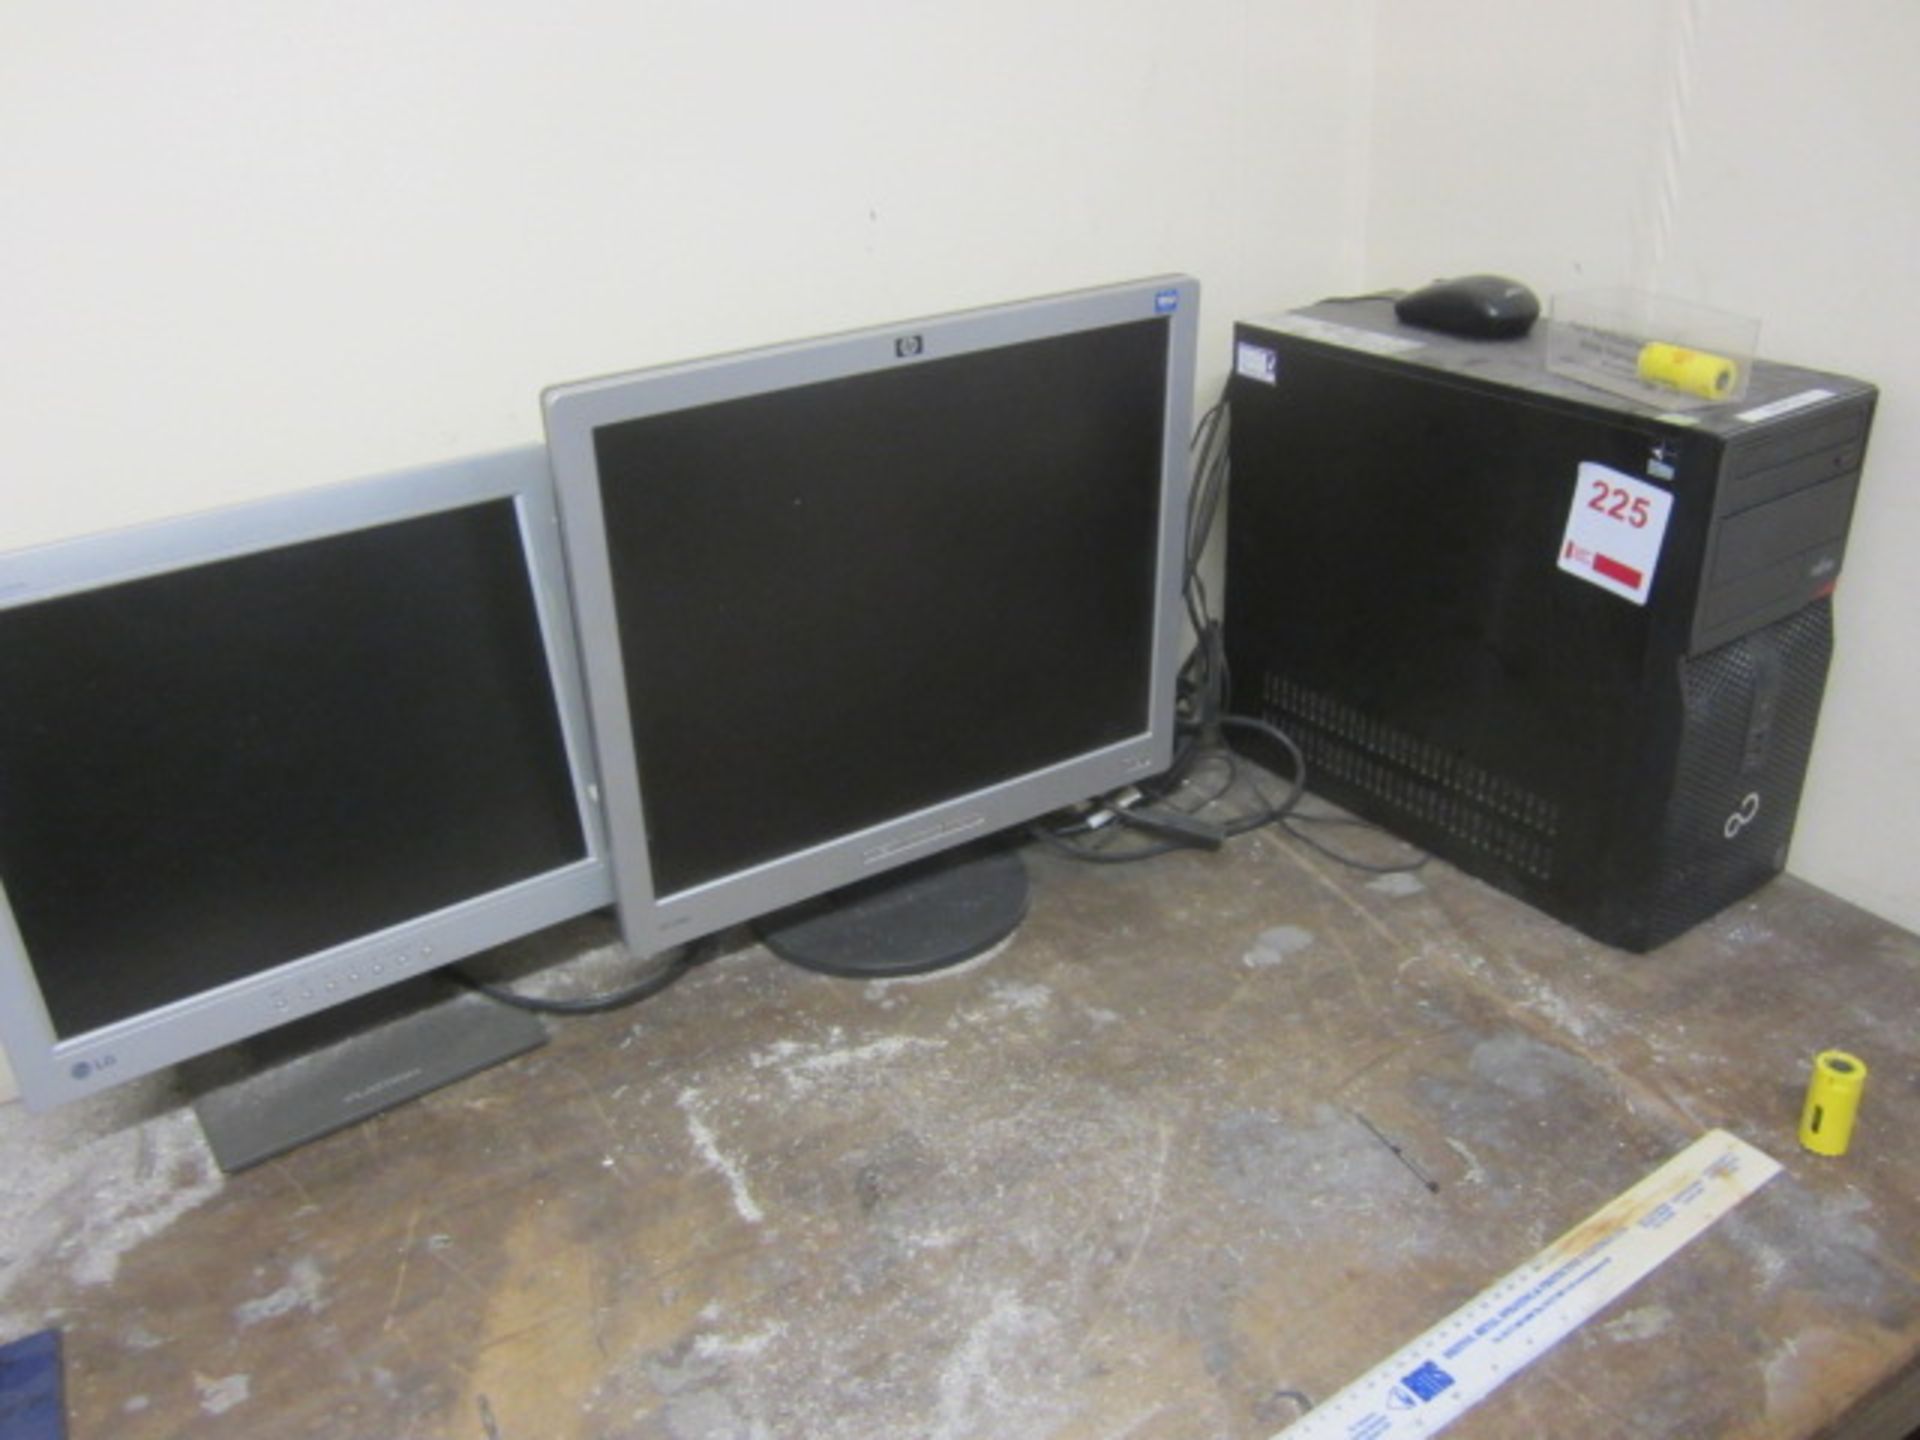 Fujitsu desktop PC and two flat screen monitors